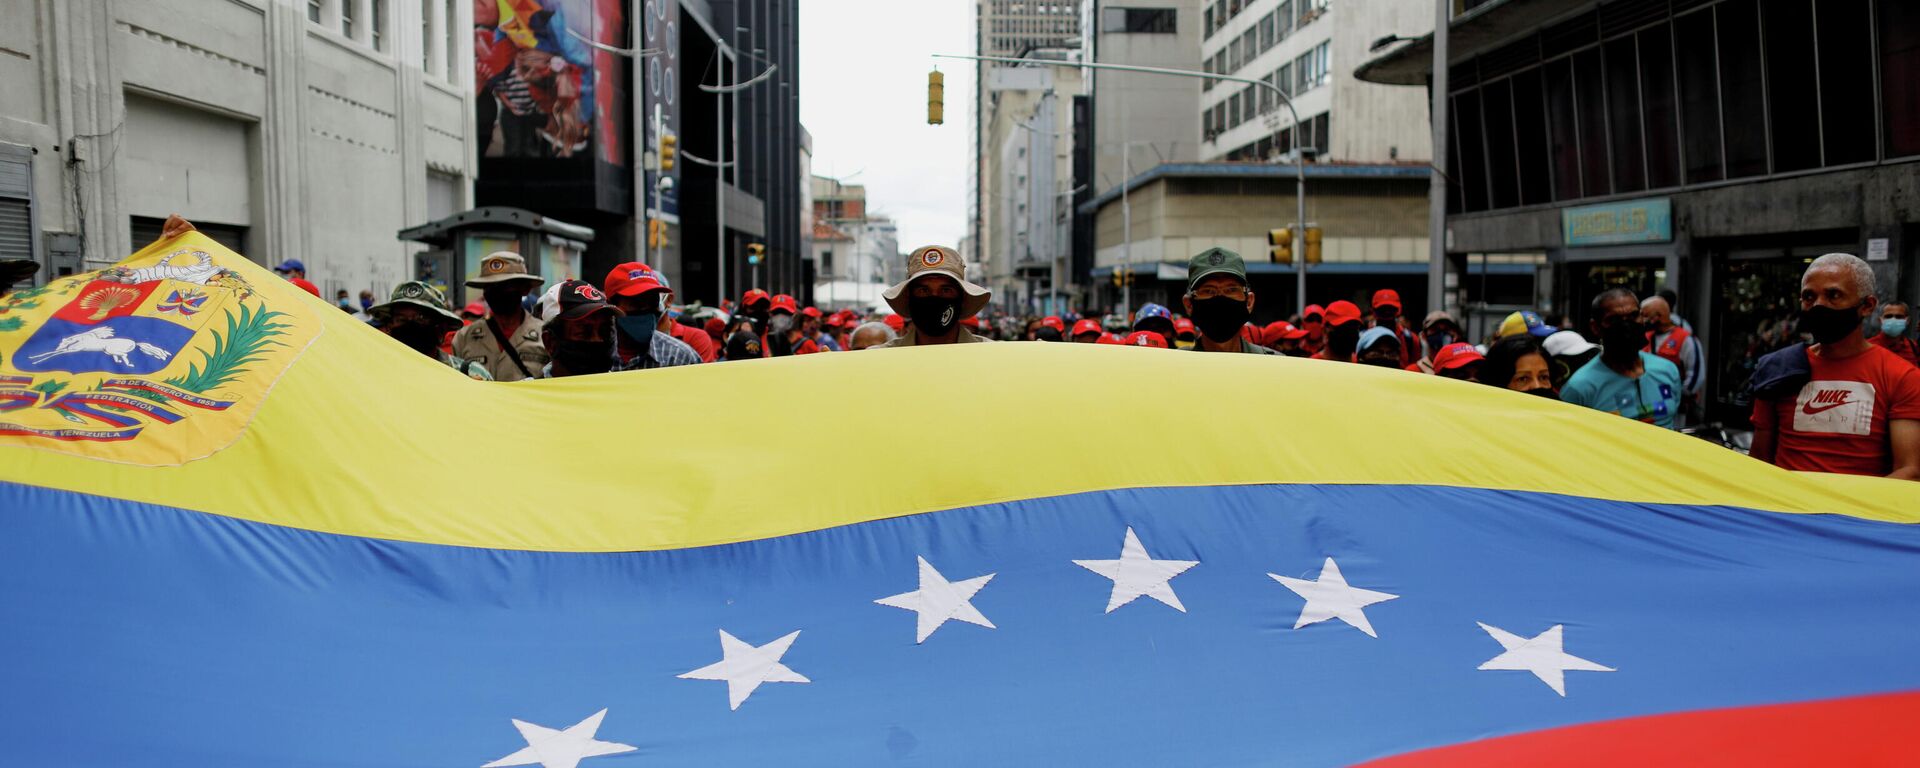 La bandera opositora de Venezuela - Sputnik Mundo, 1920, 13.05.2021